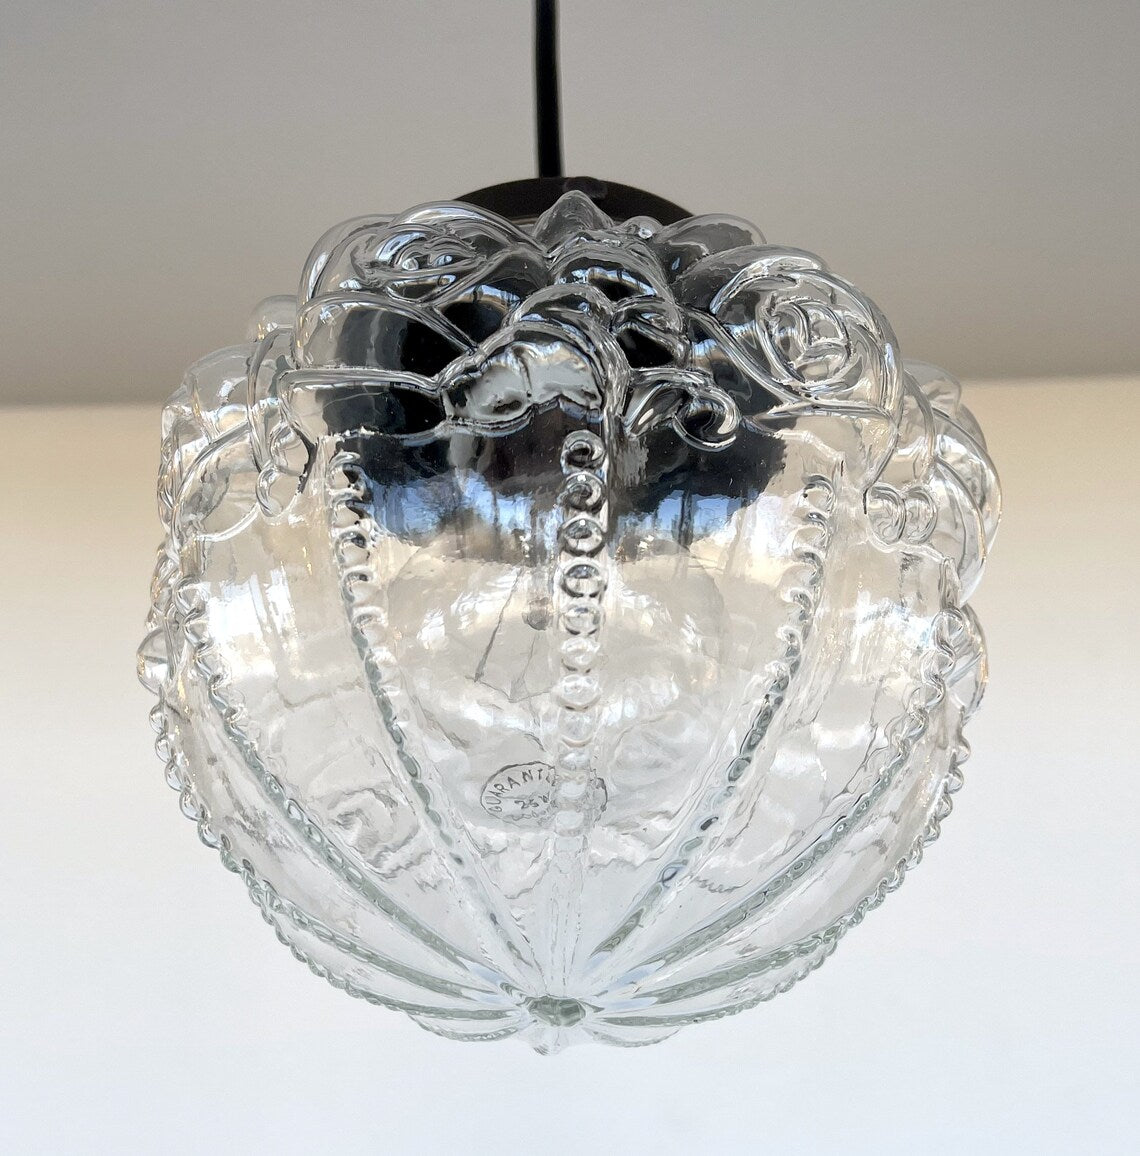 Embossed Antique Glass Globe PENDANT Lights